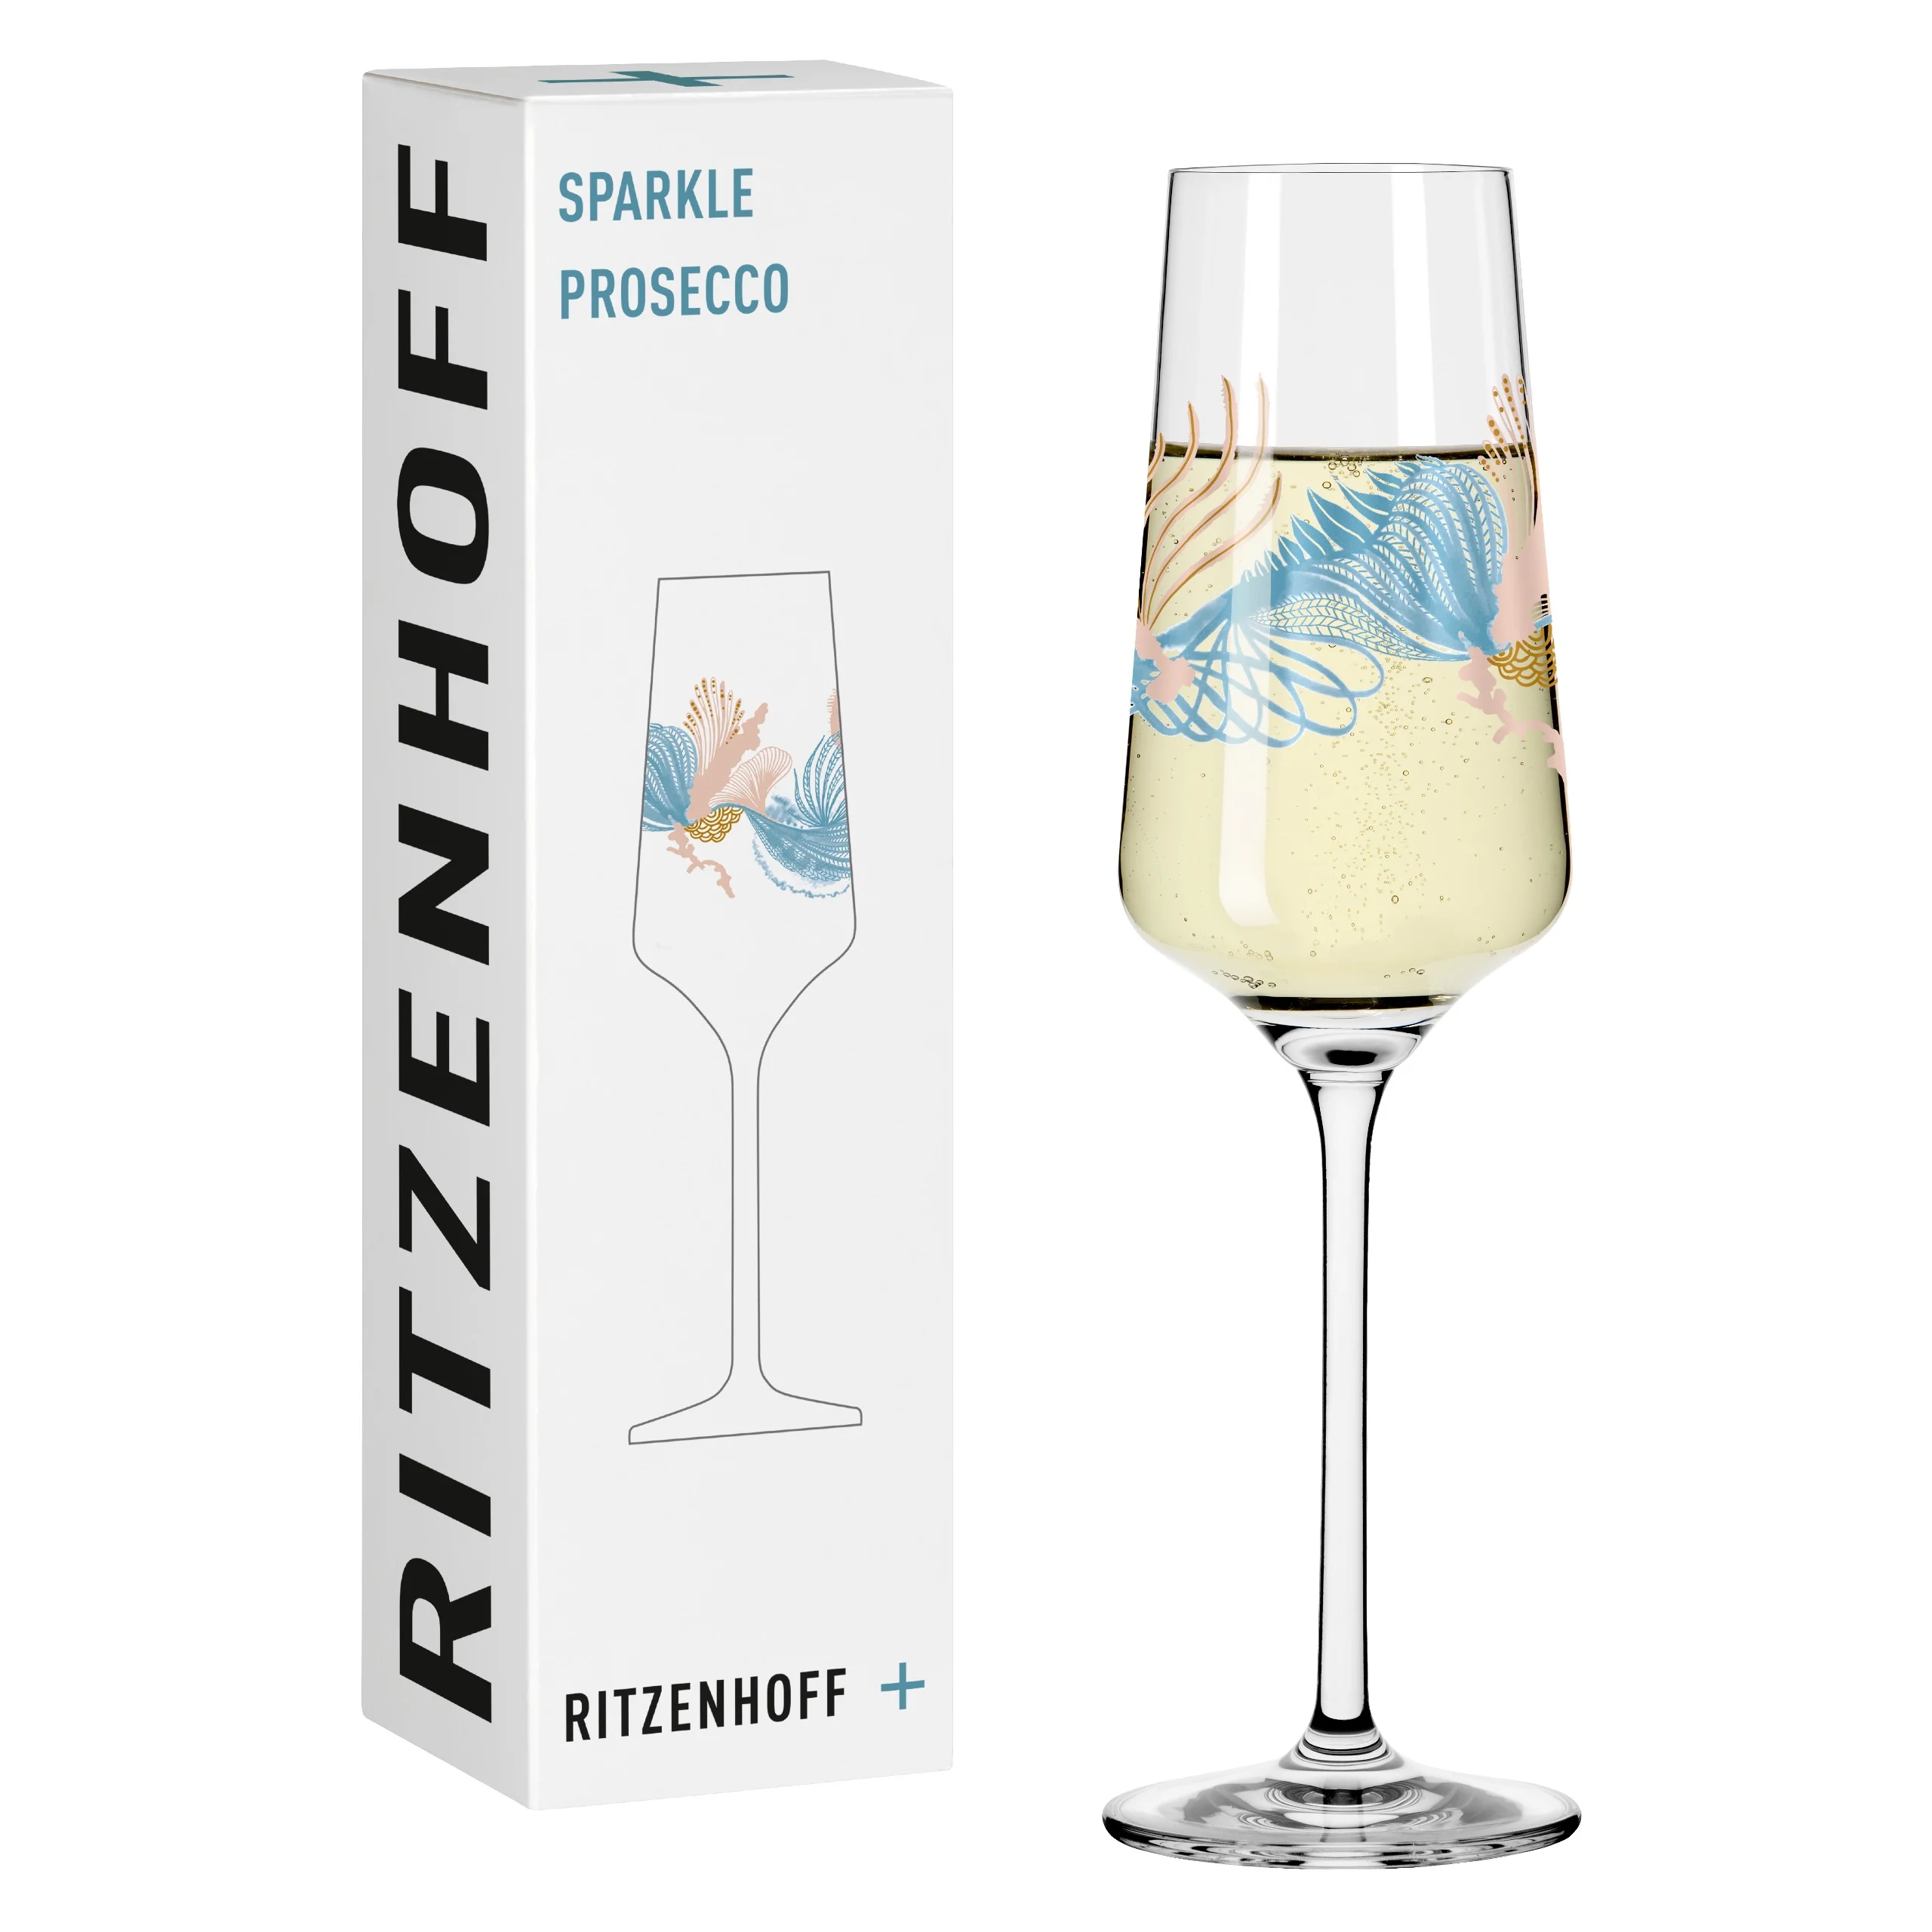 Sparkle Kiran Spilhaus Glass Prosecco Ritzenhoff #11 - Patel